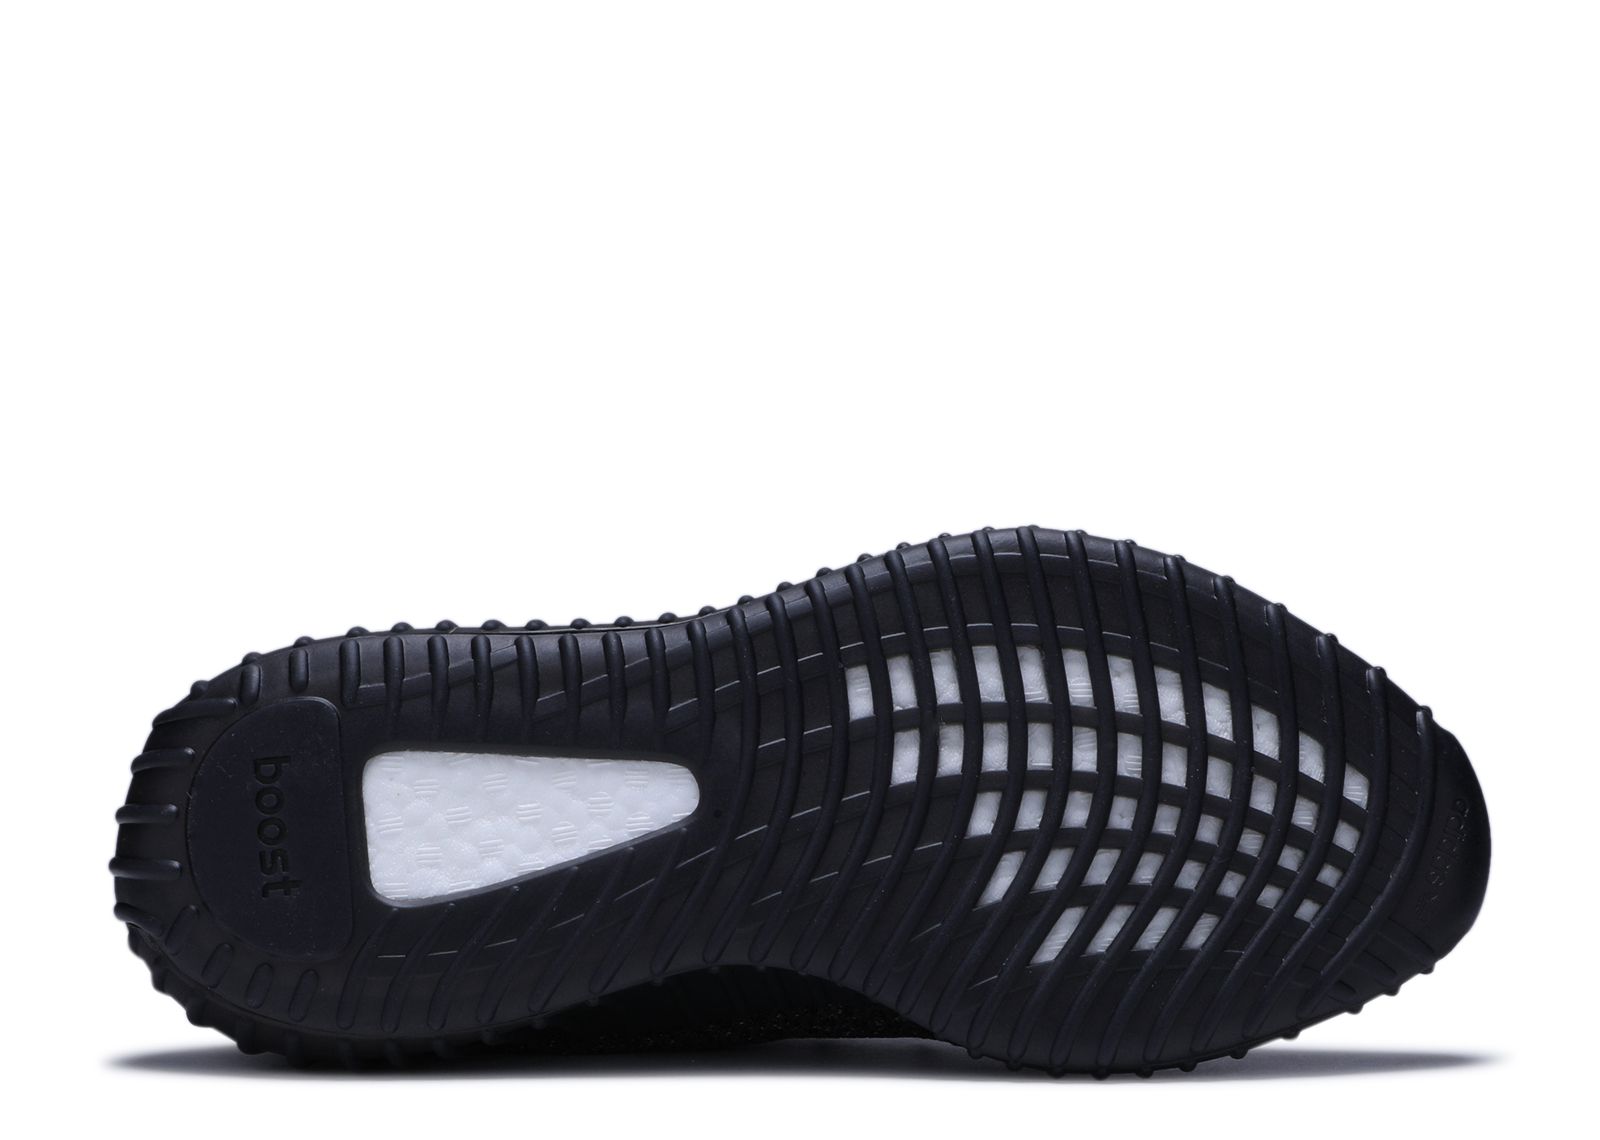 adidas yeezy boost 350 v2 black reflective price